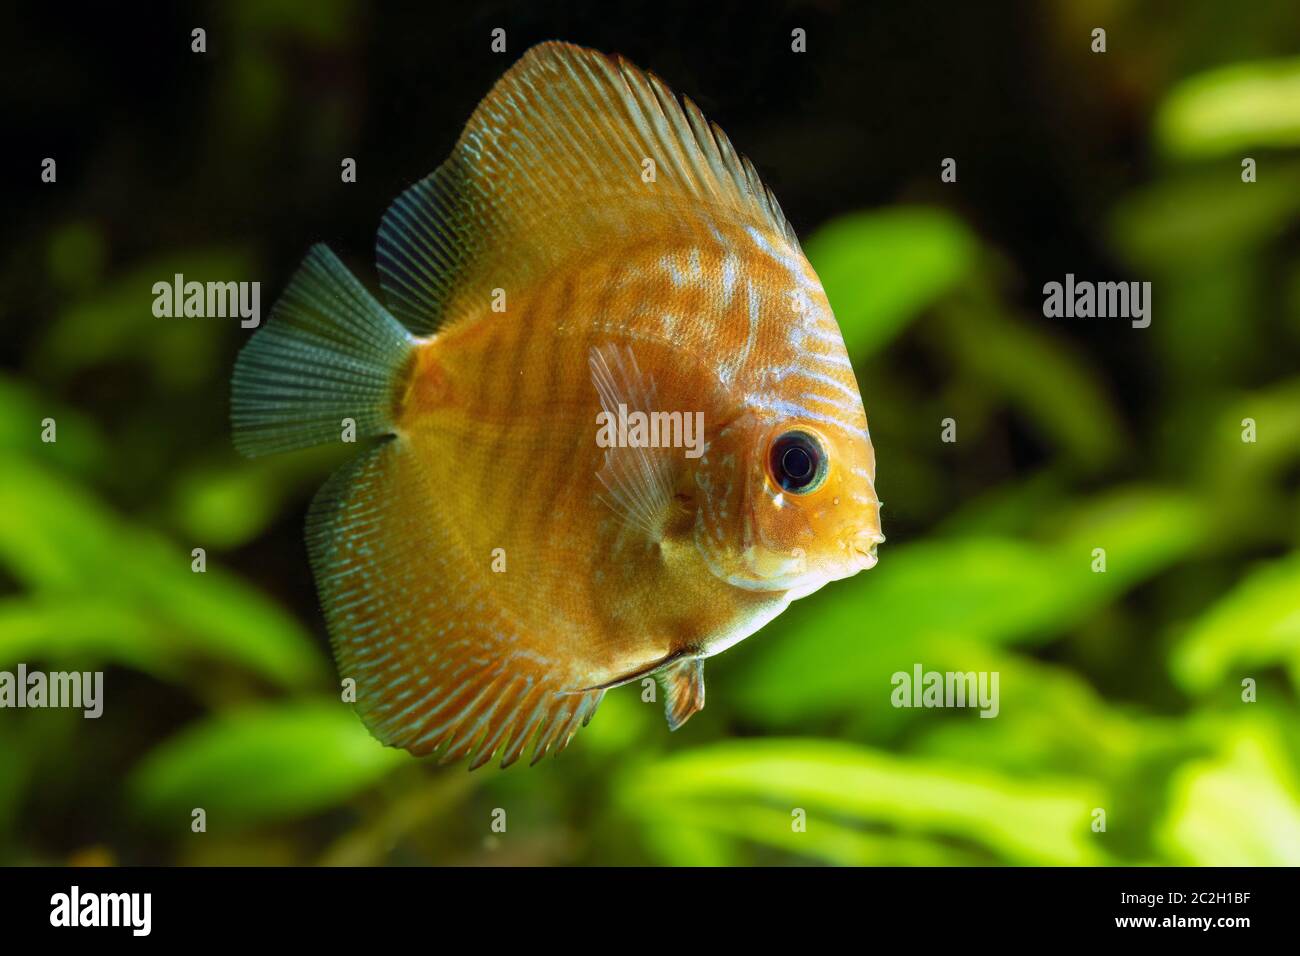 Juvenile Discus fish (genus Symphysodon) Stock Photo